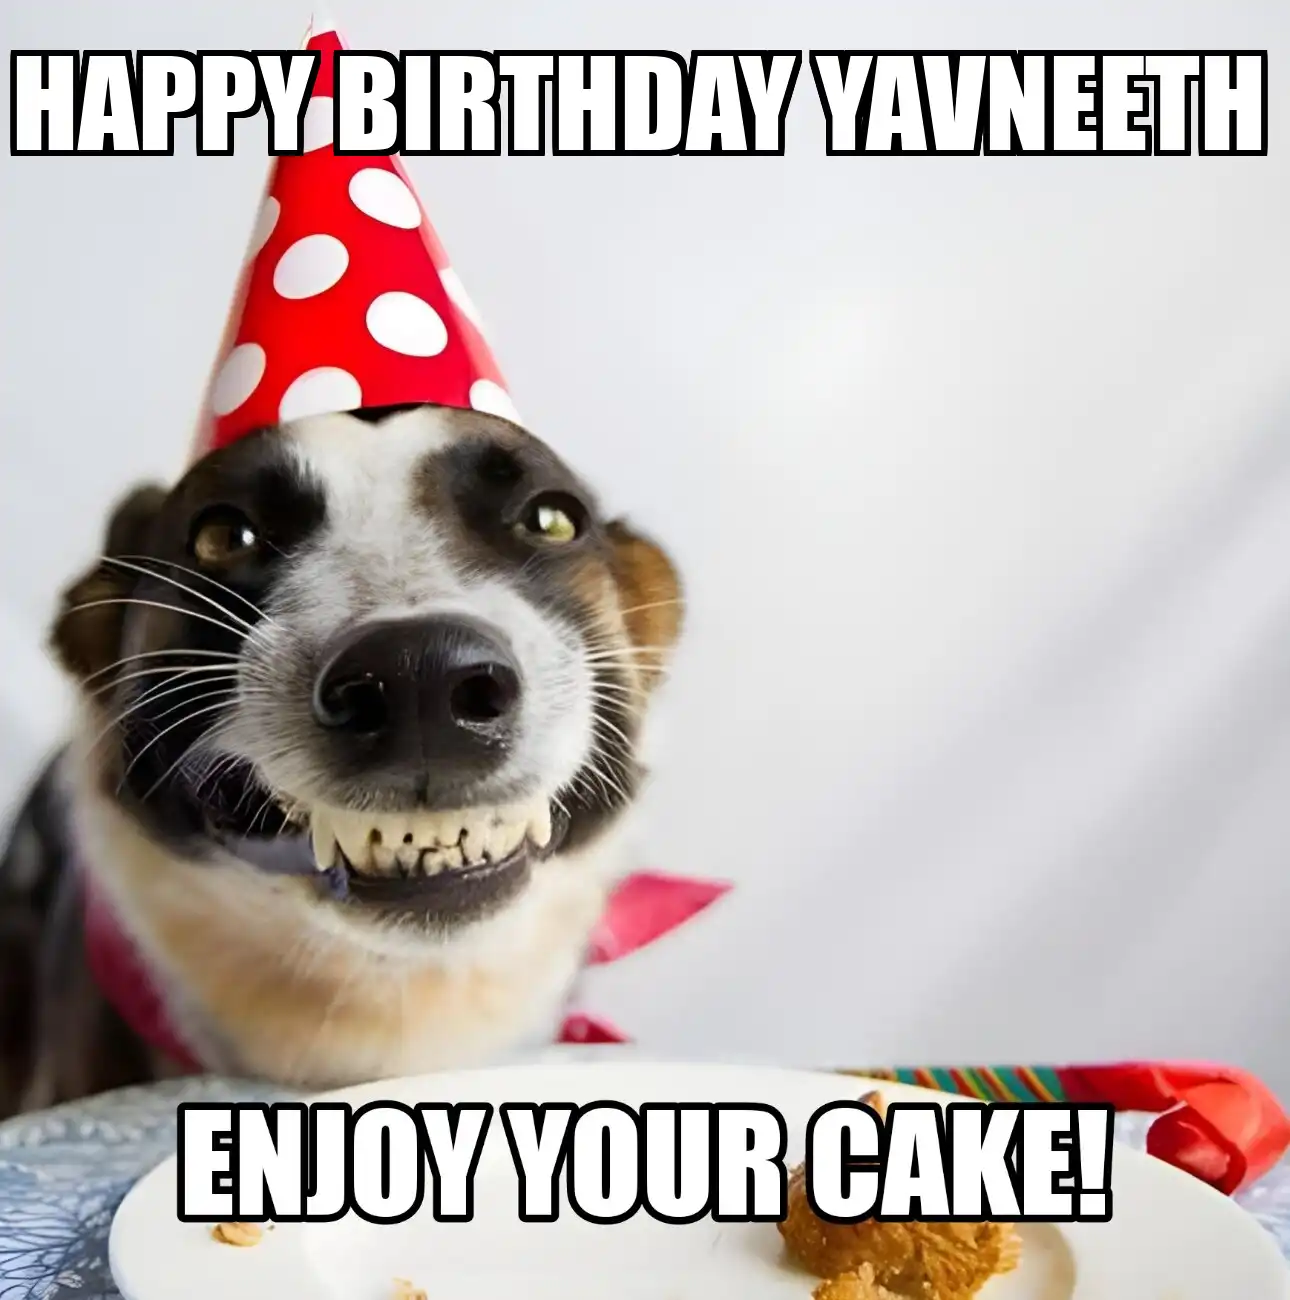 Happy Birthday Yavneeth Enjoy Your Cake Dog Meme